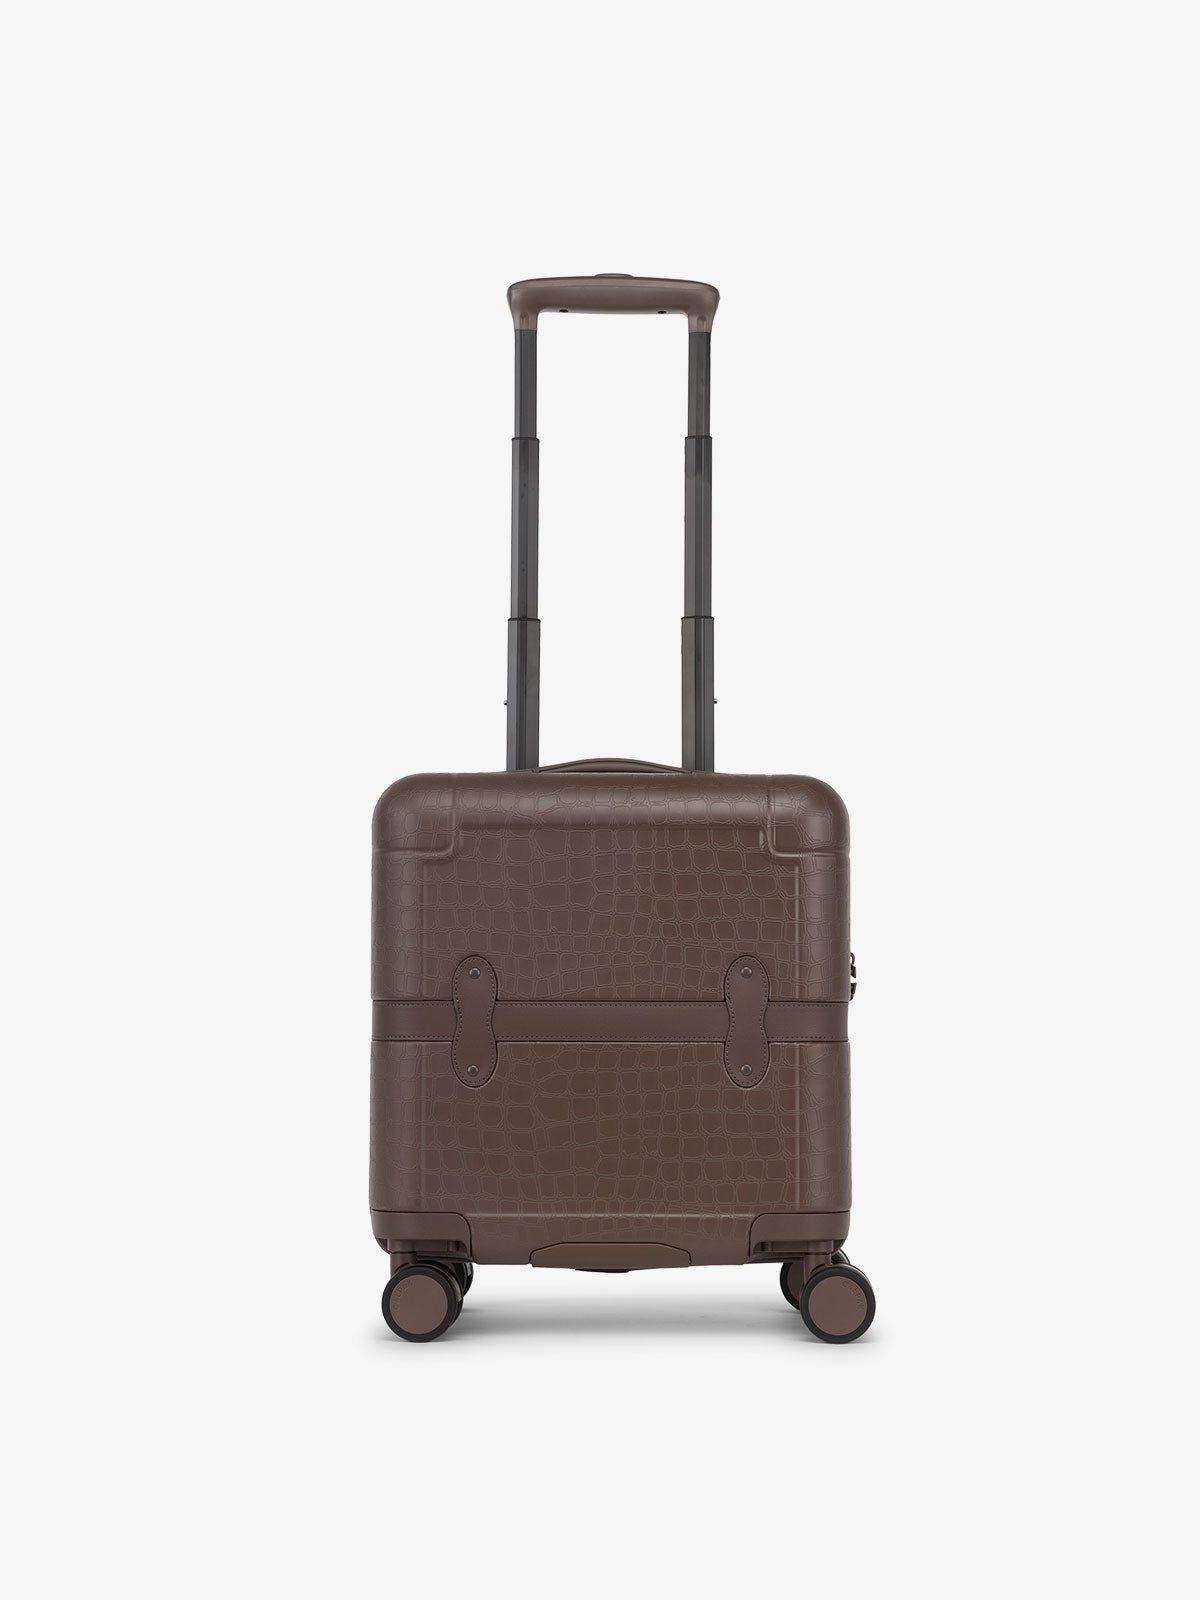 CALPAK TRNK mini carry on luggage with faux-crocodile design in espresso